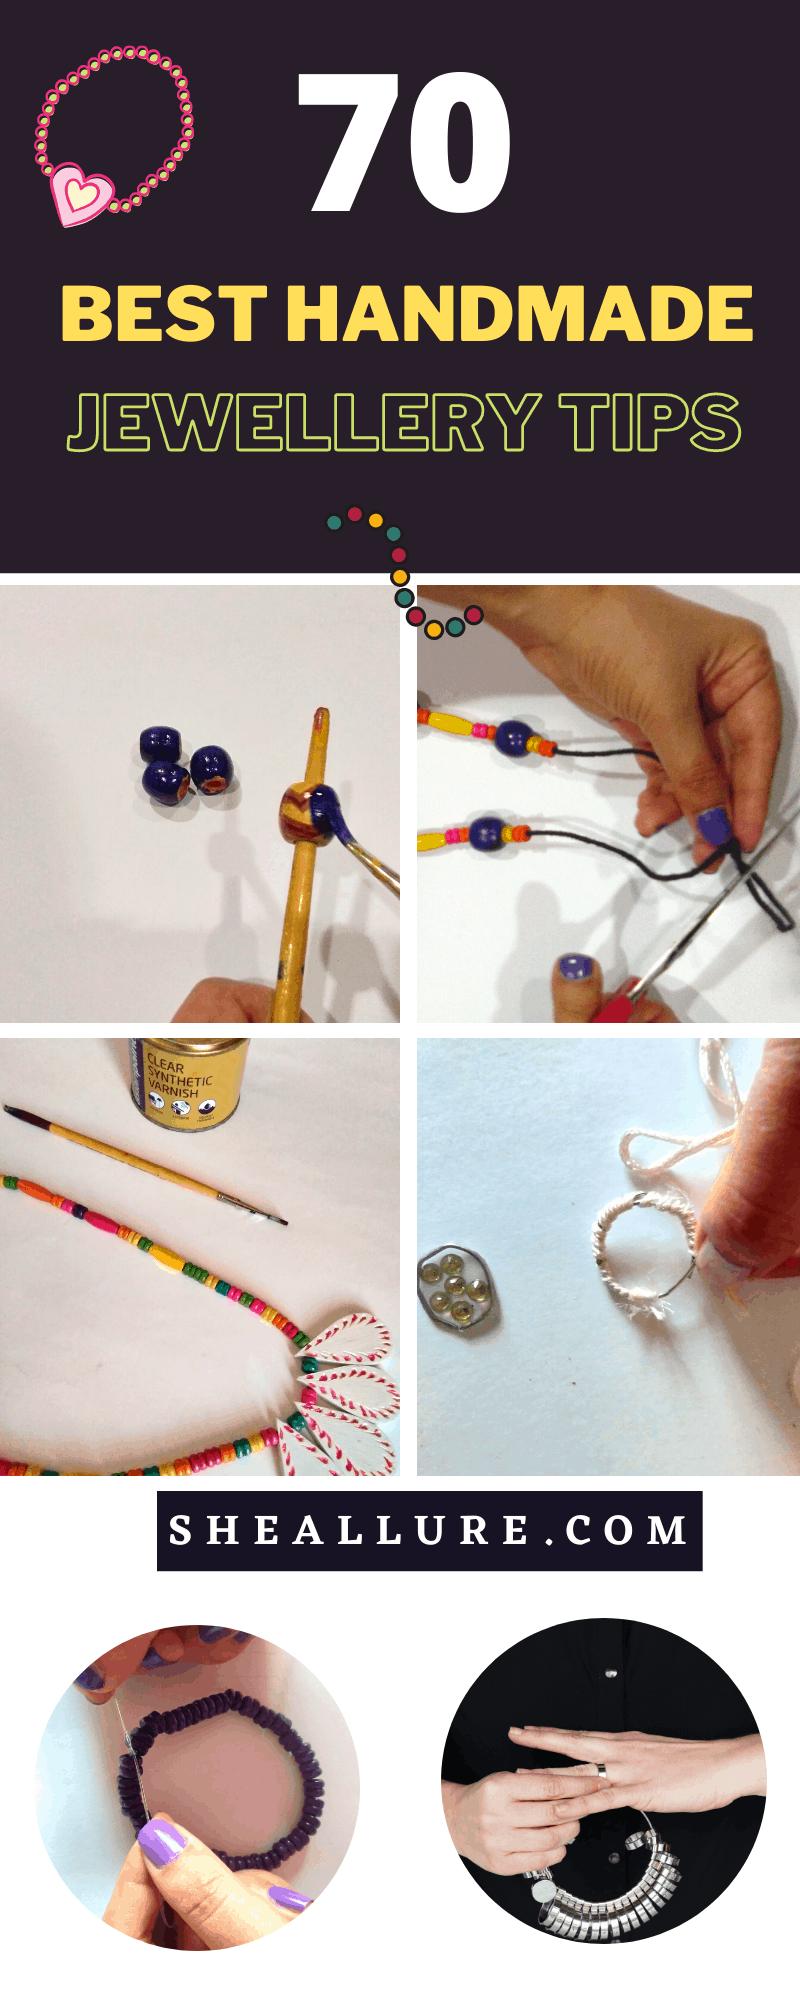 Handmade jewellery tips